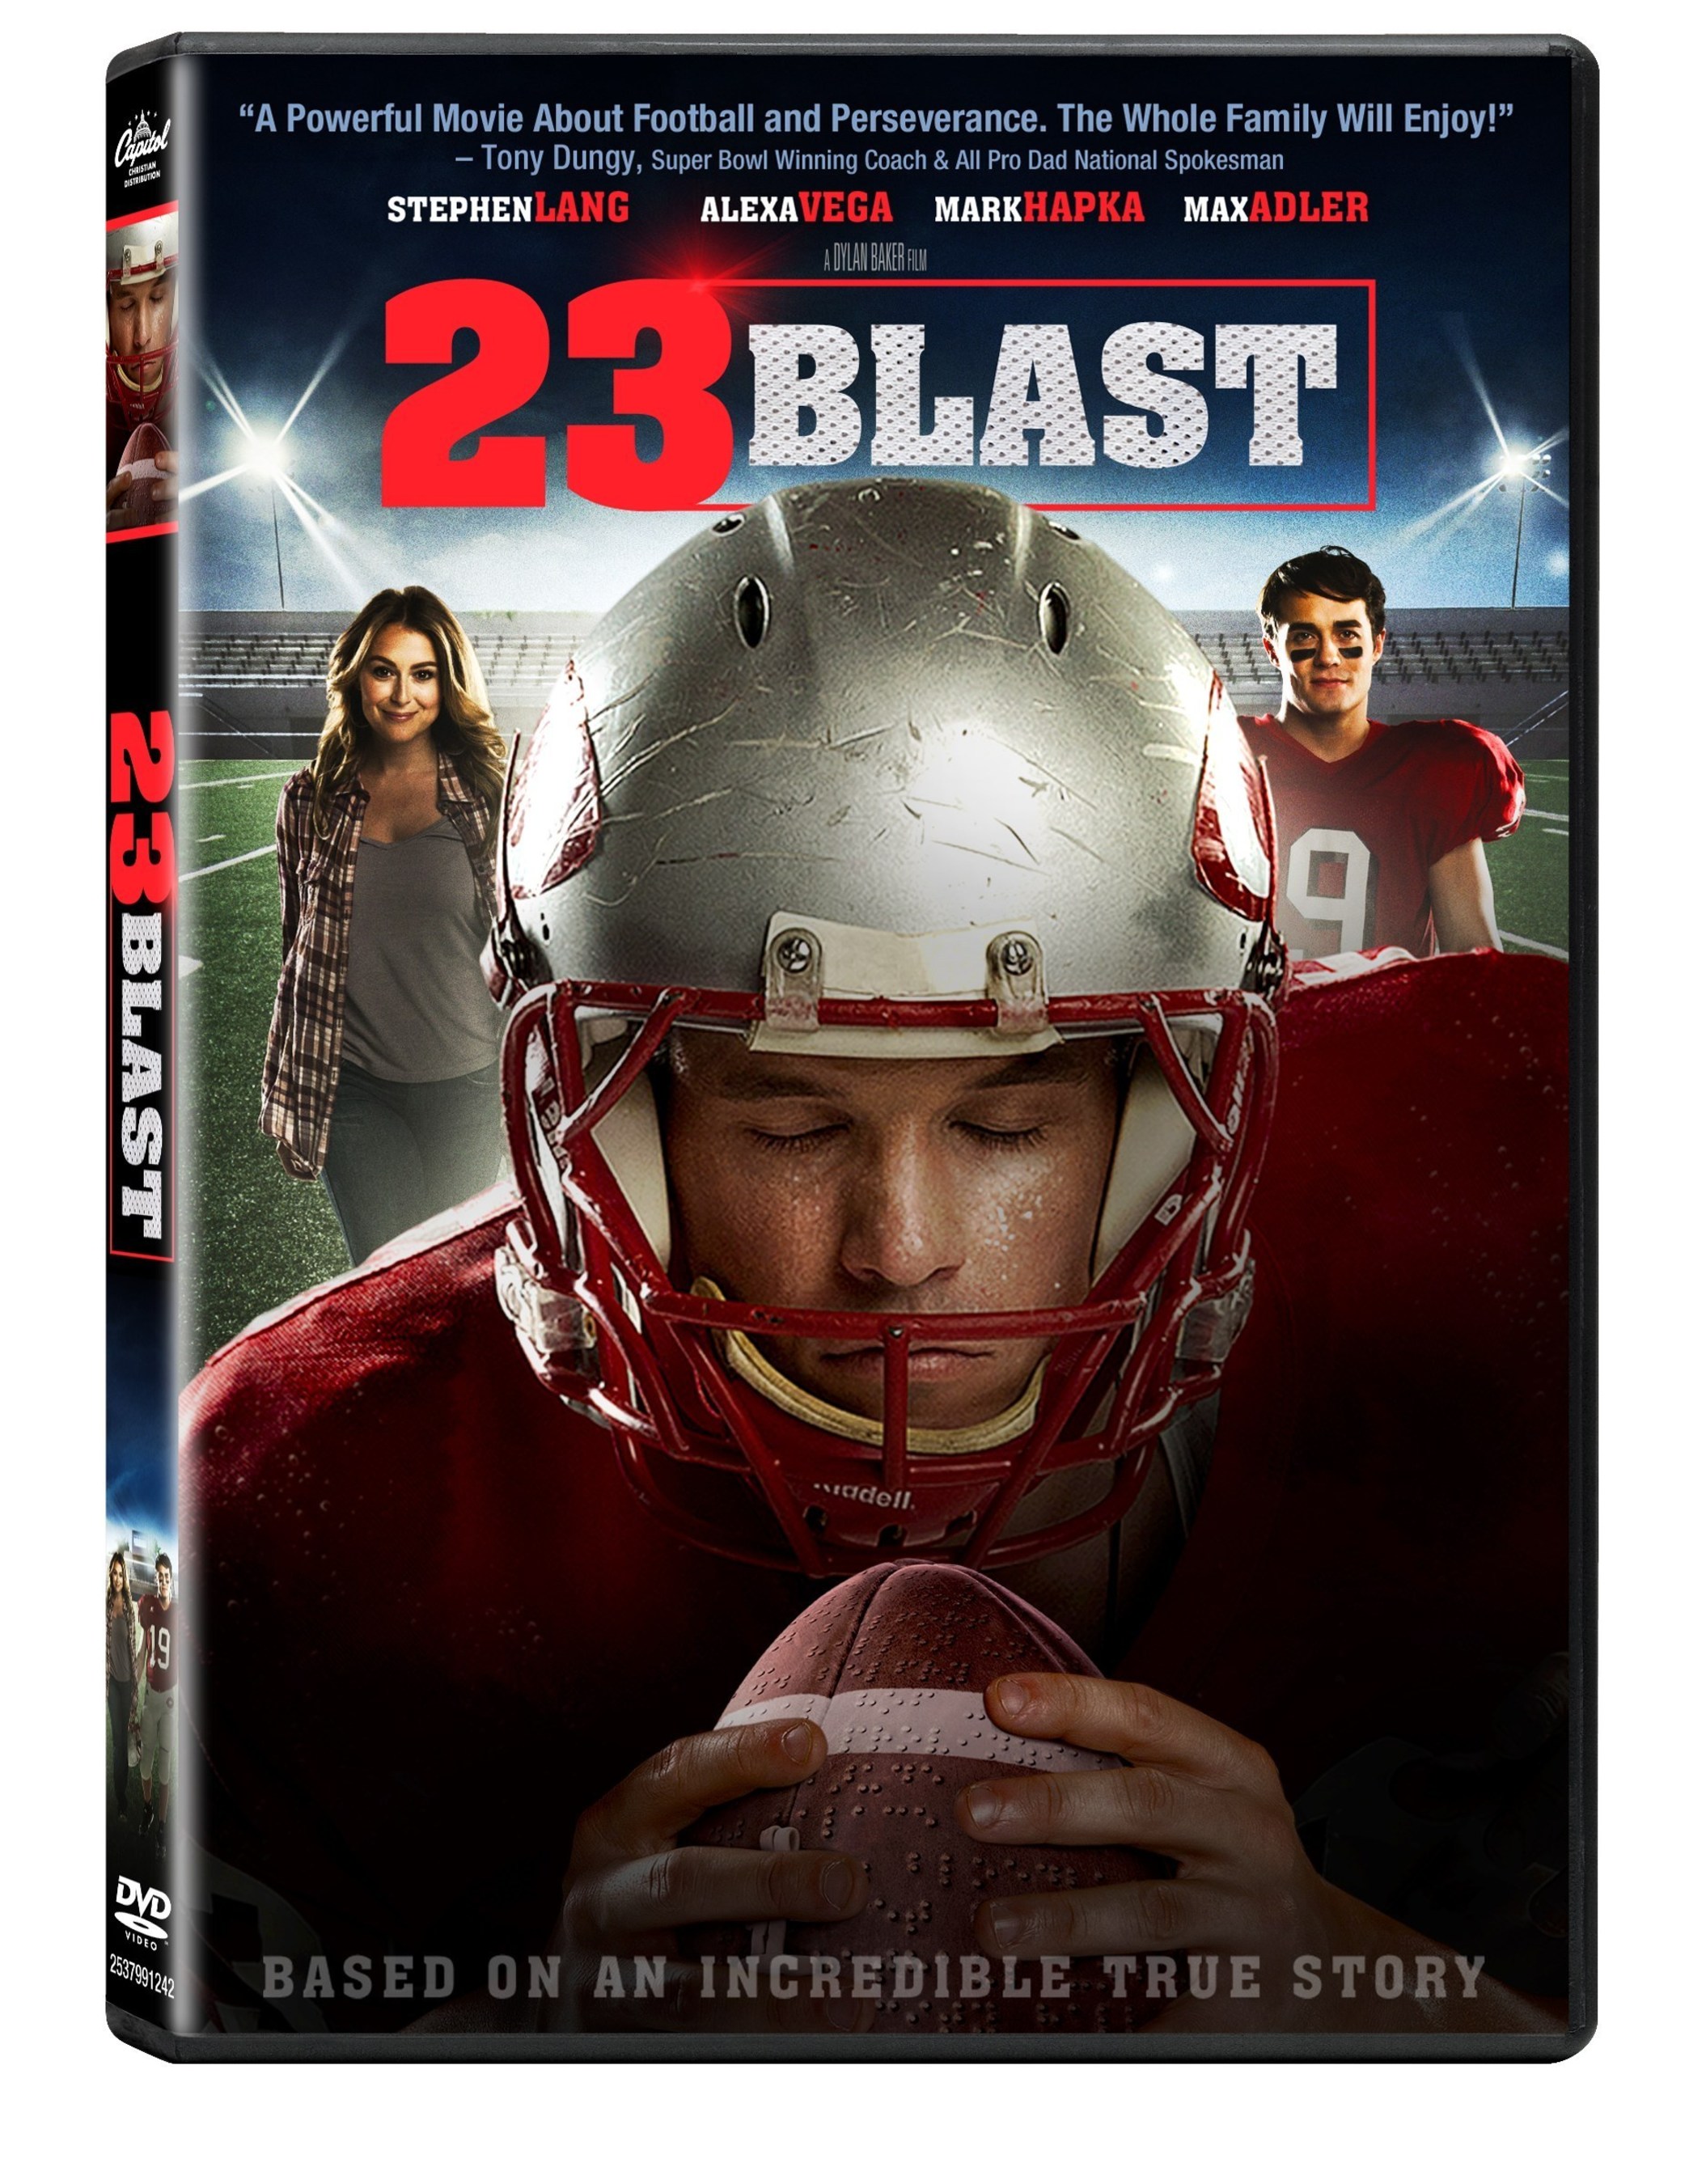 23 Blast arrives on DVD January 20 from Ocean Avenue Entertainment